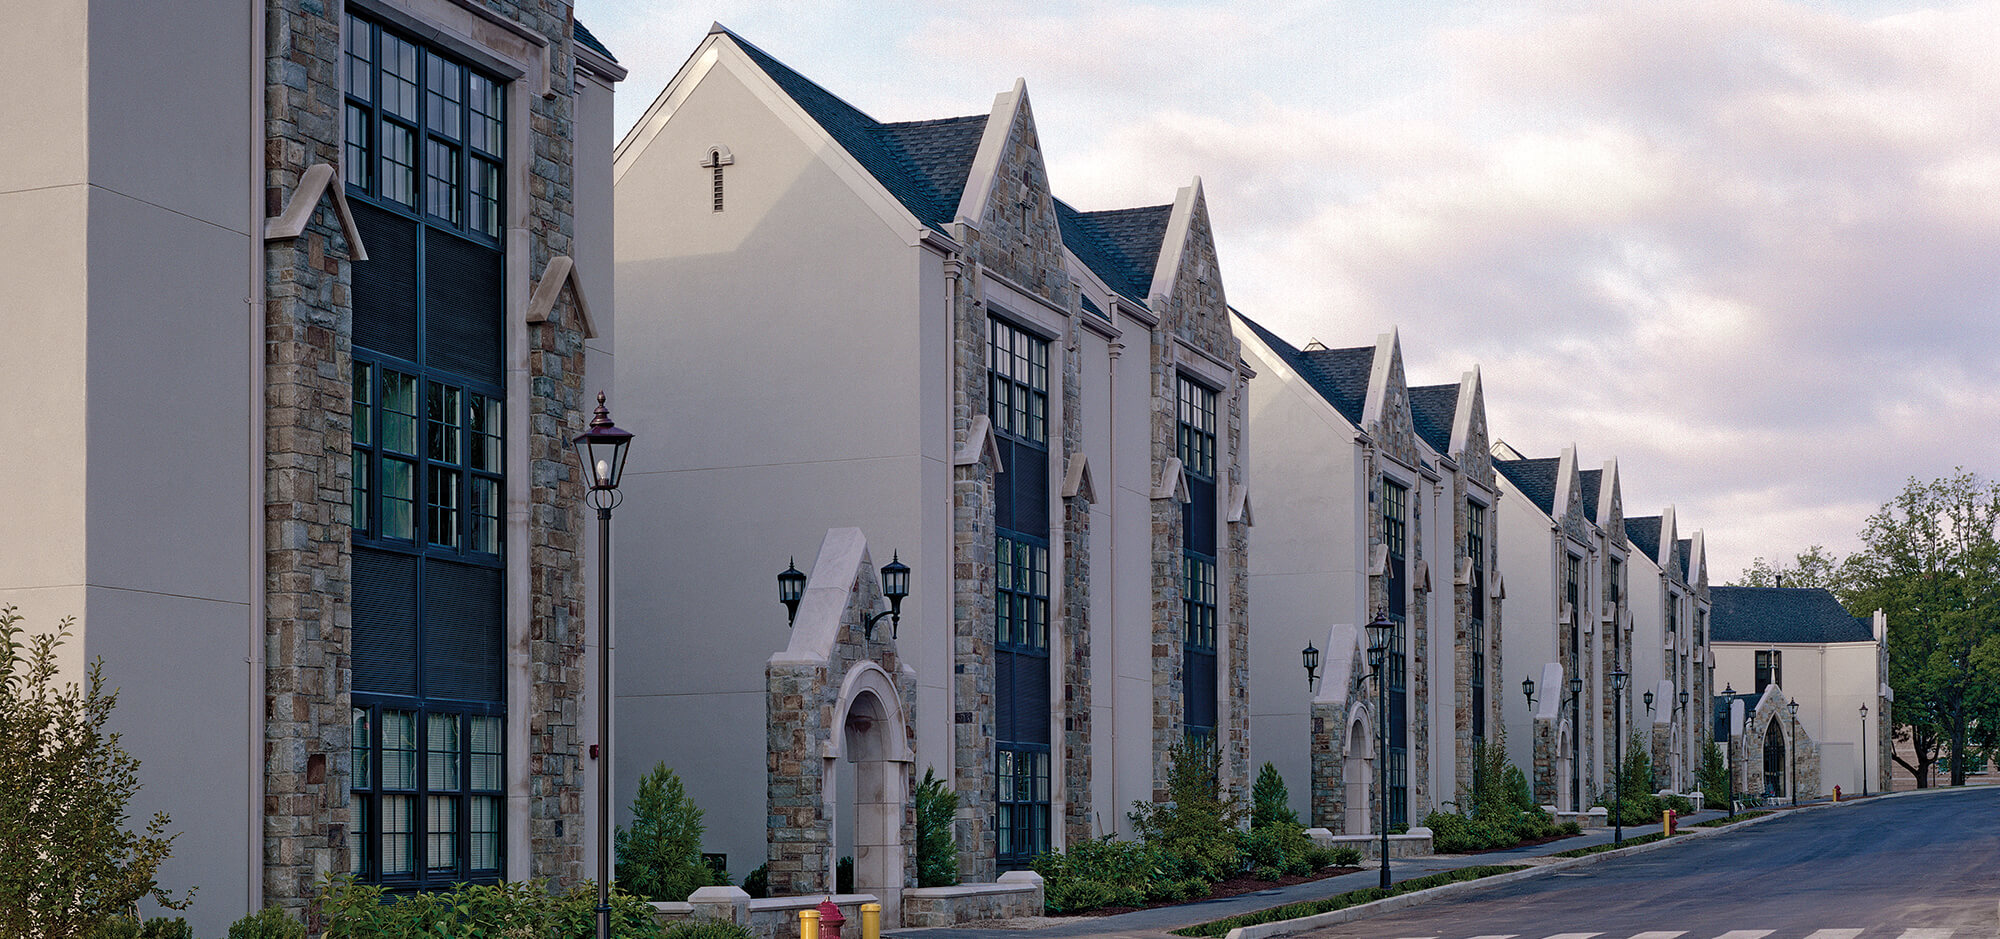 GO to St. John’s University – Dormitories and Priest Housing